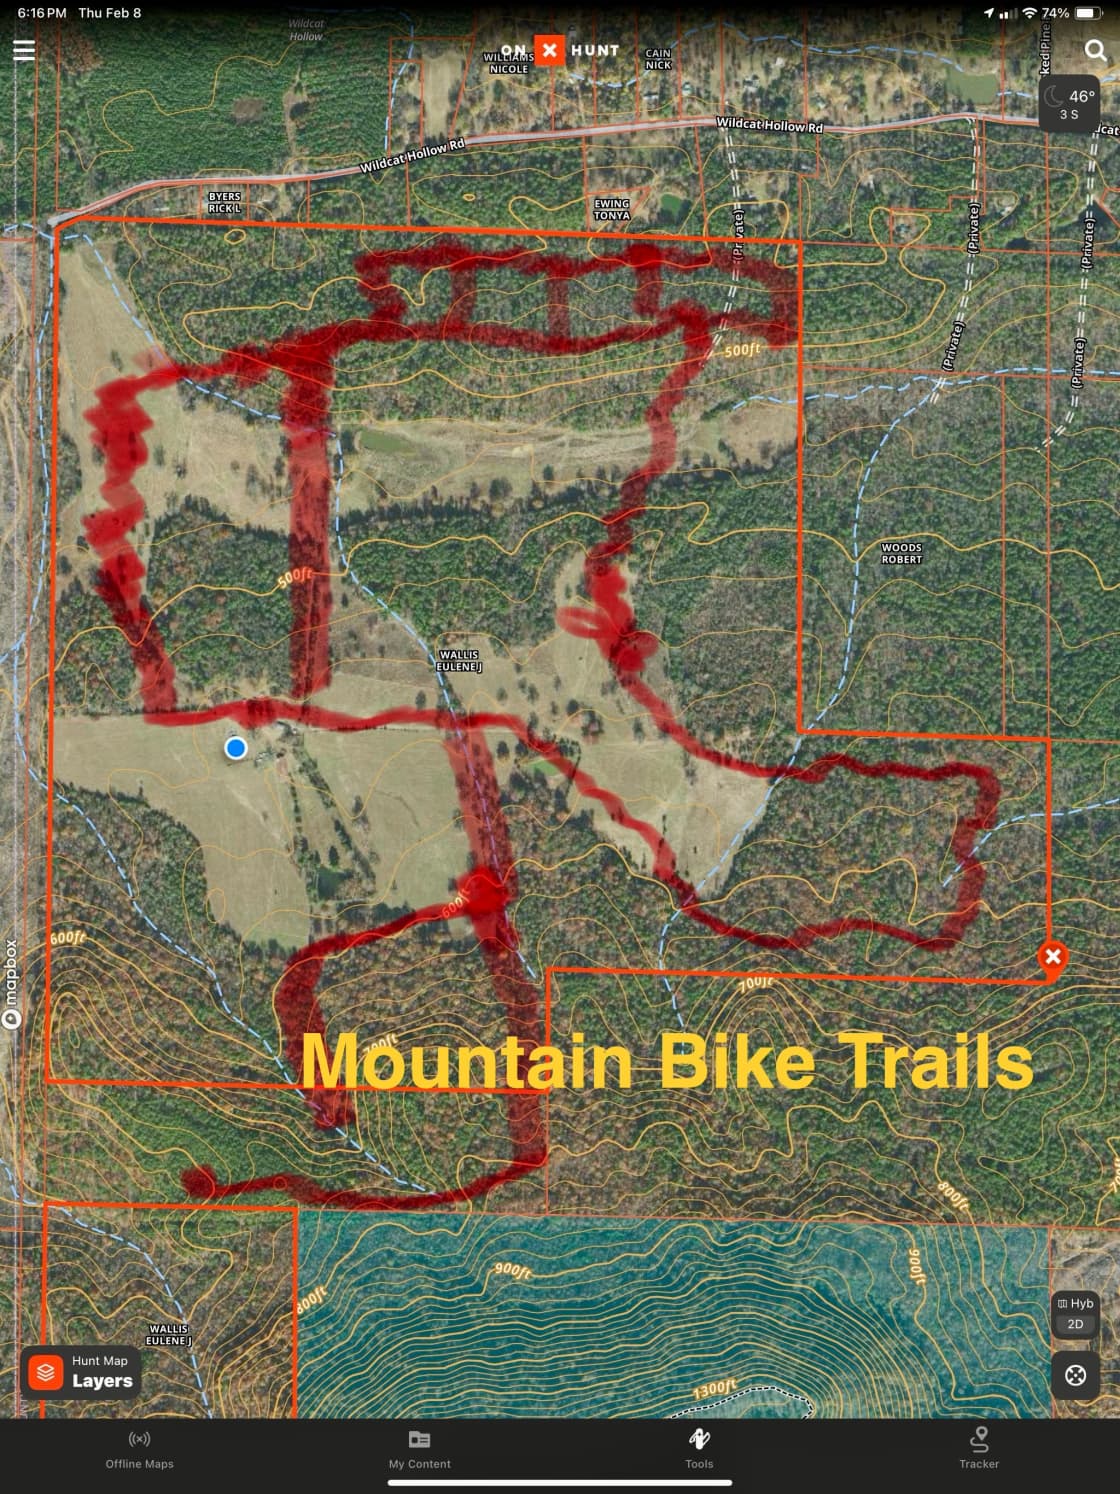 Wildcat Hollow Camp & Mountain Bike